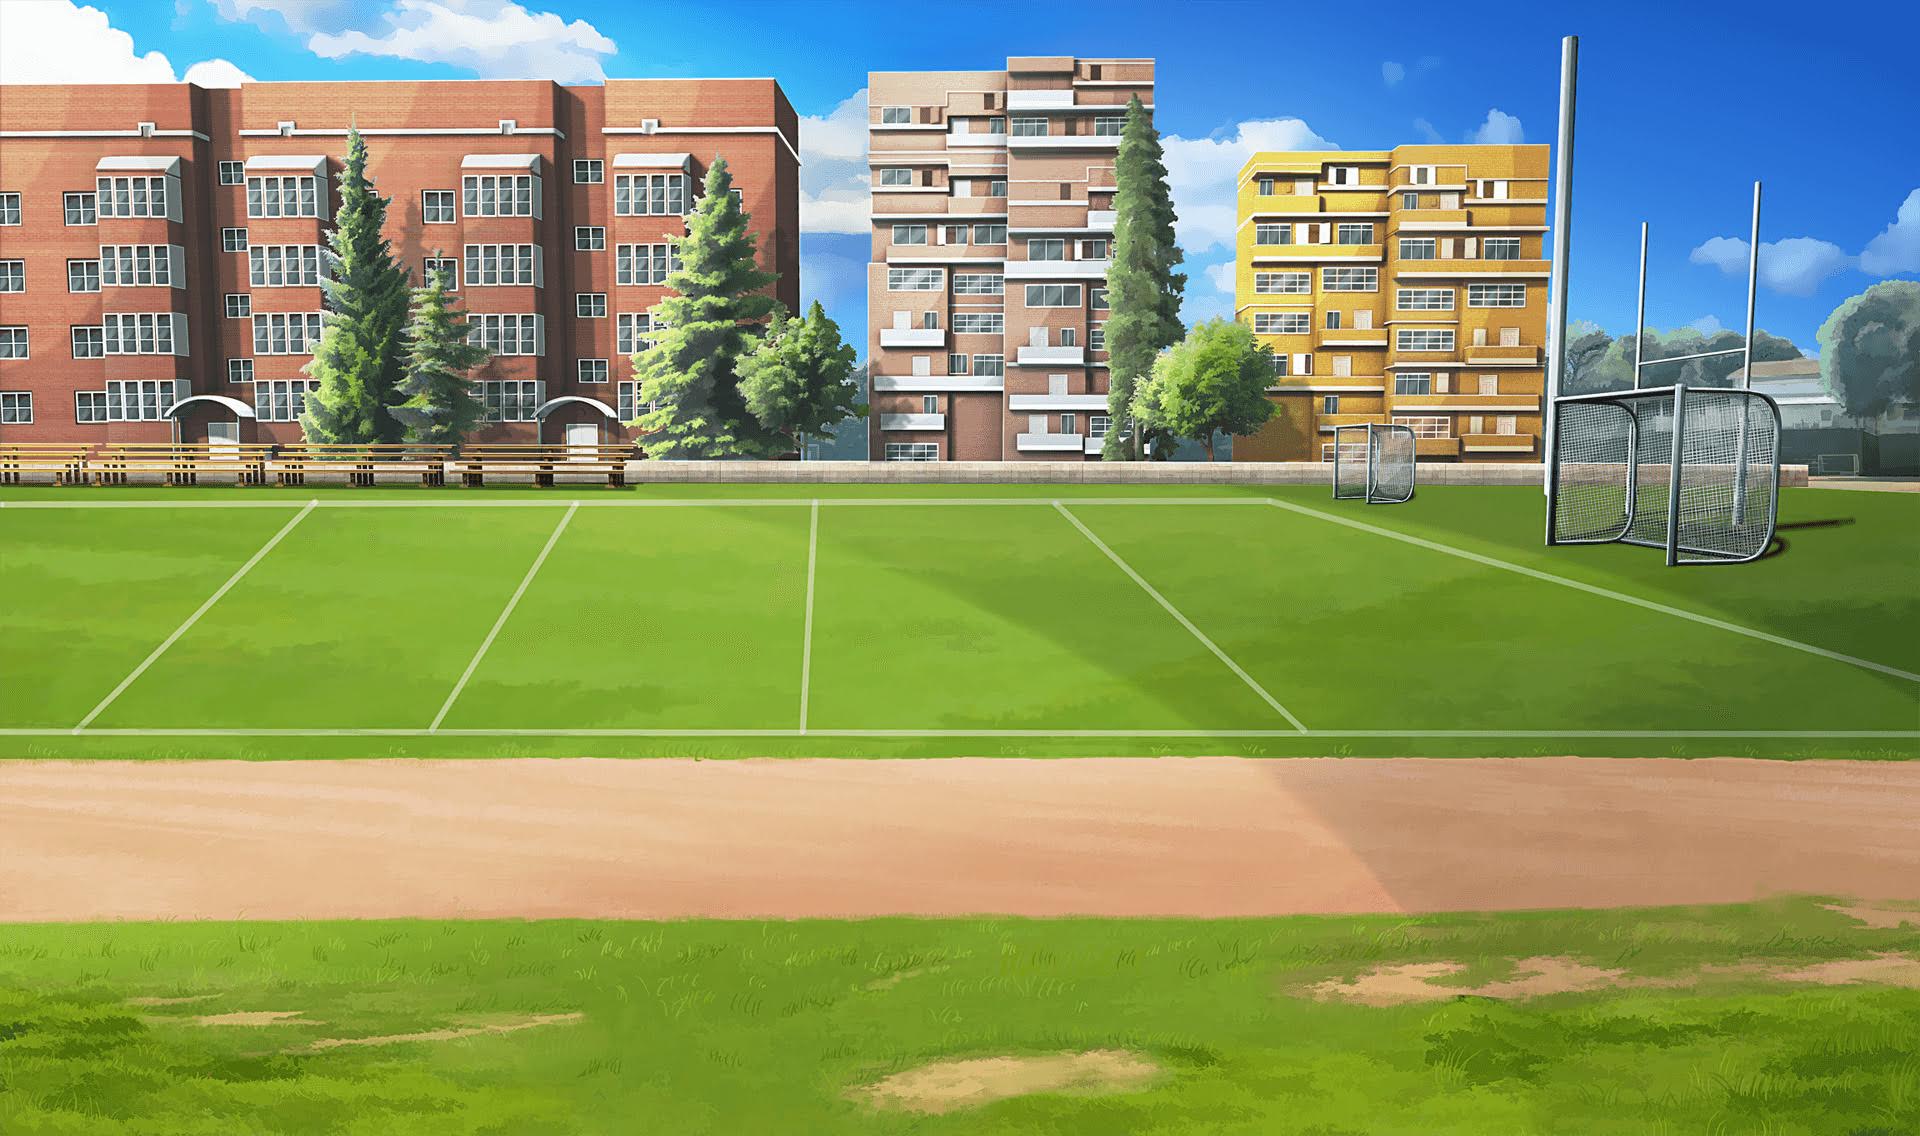 Best Buildings image. episode background, anime scenery, anime background